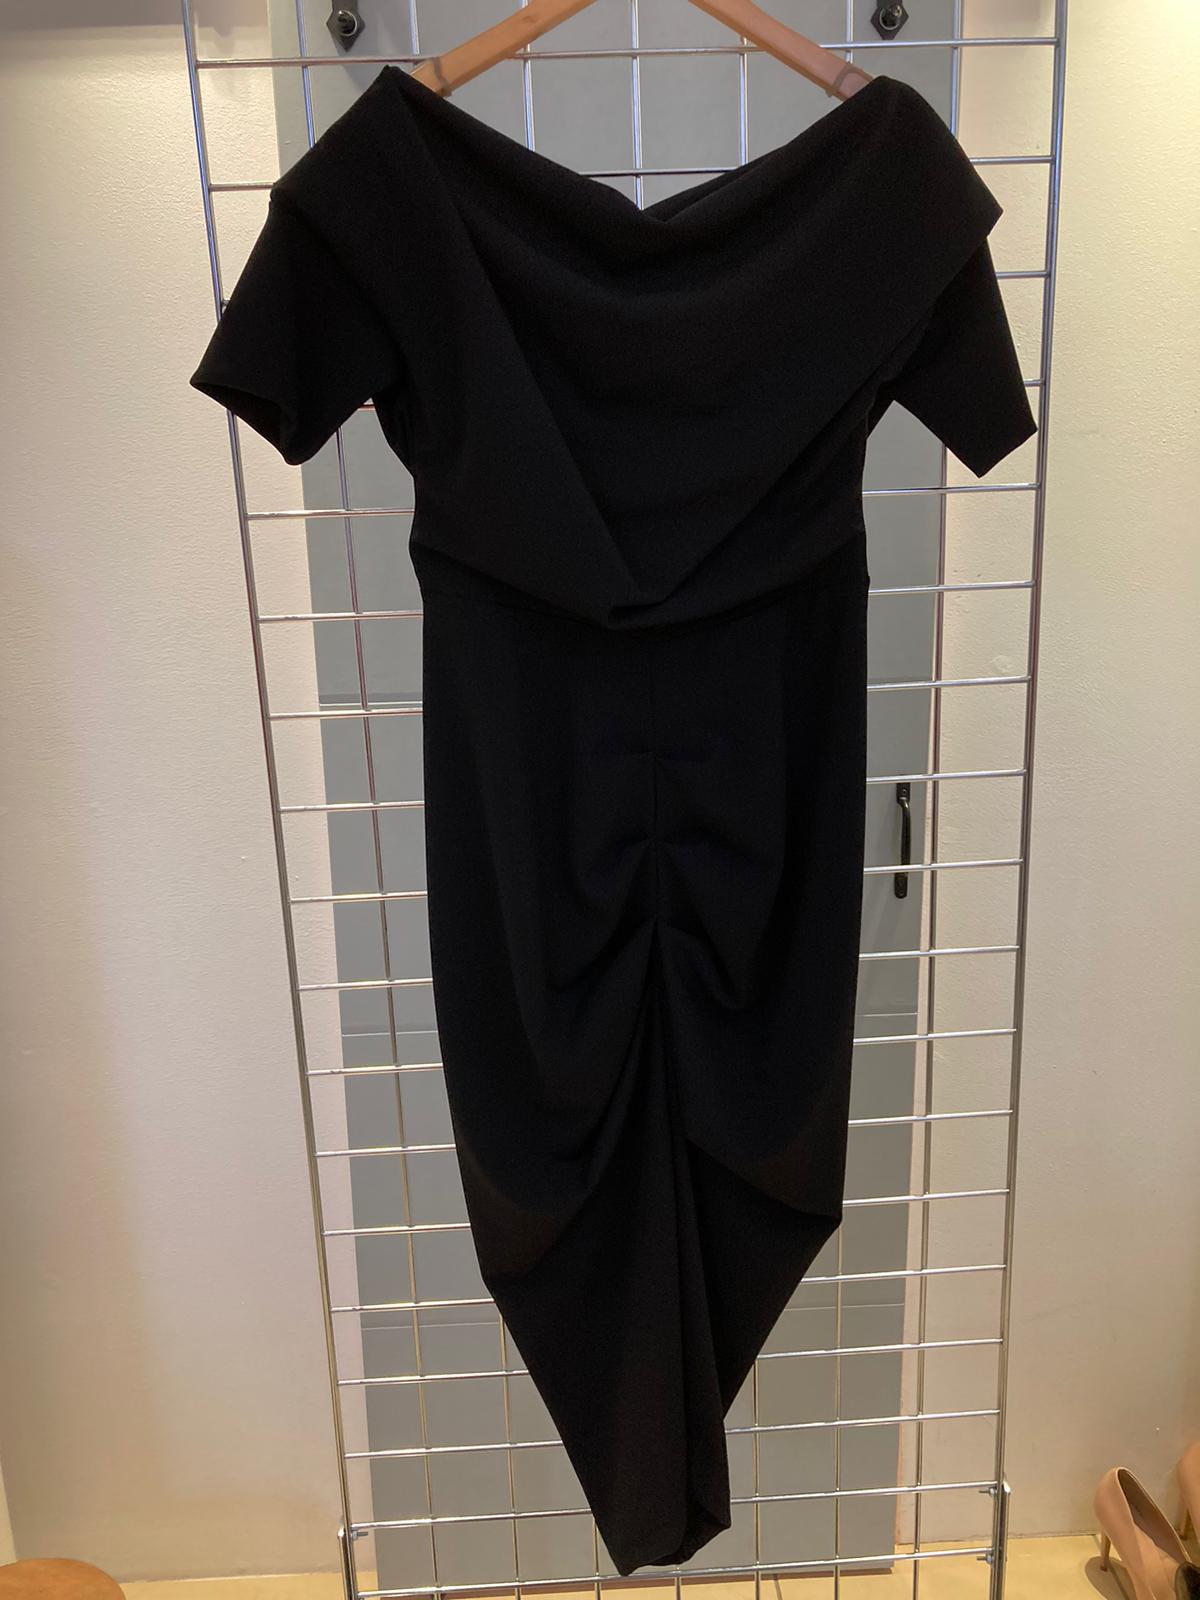 Atom label black crepe dress - Maya Maya Ltd